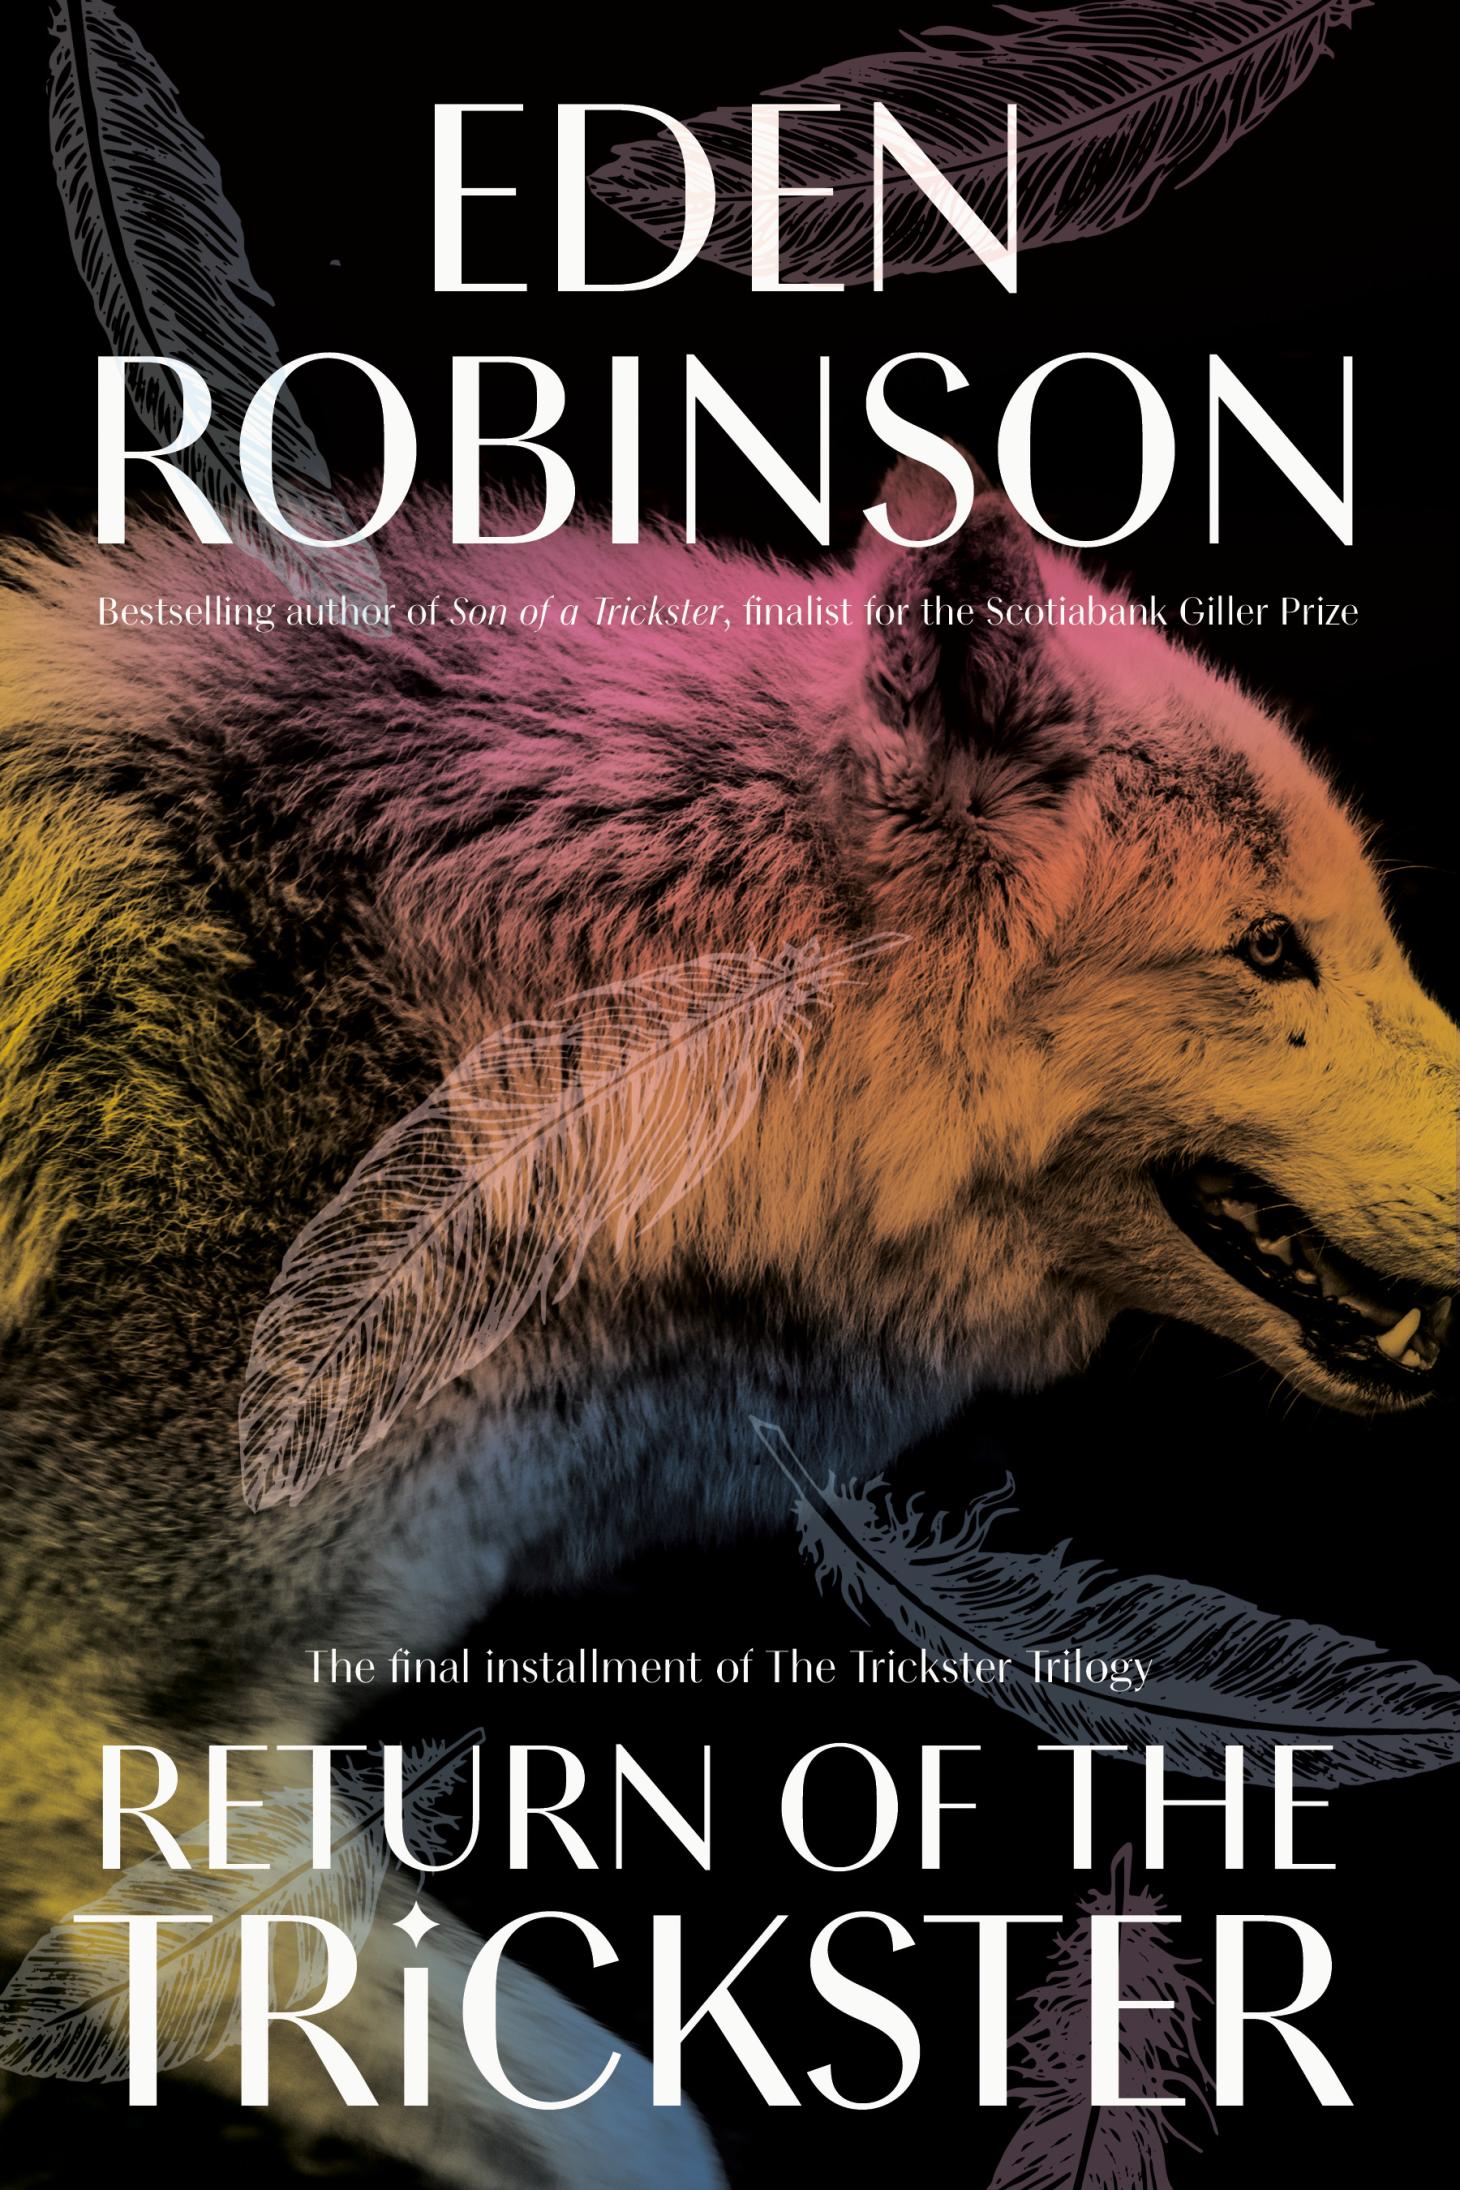 Book cover of Eden Robinson's novel Return of the Trickster.